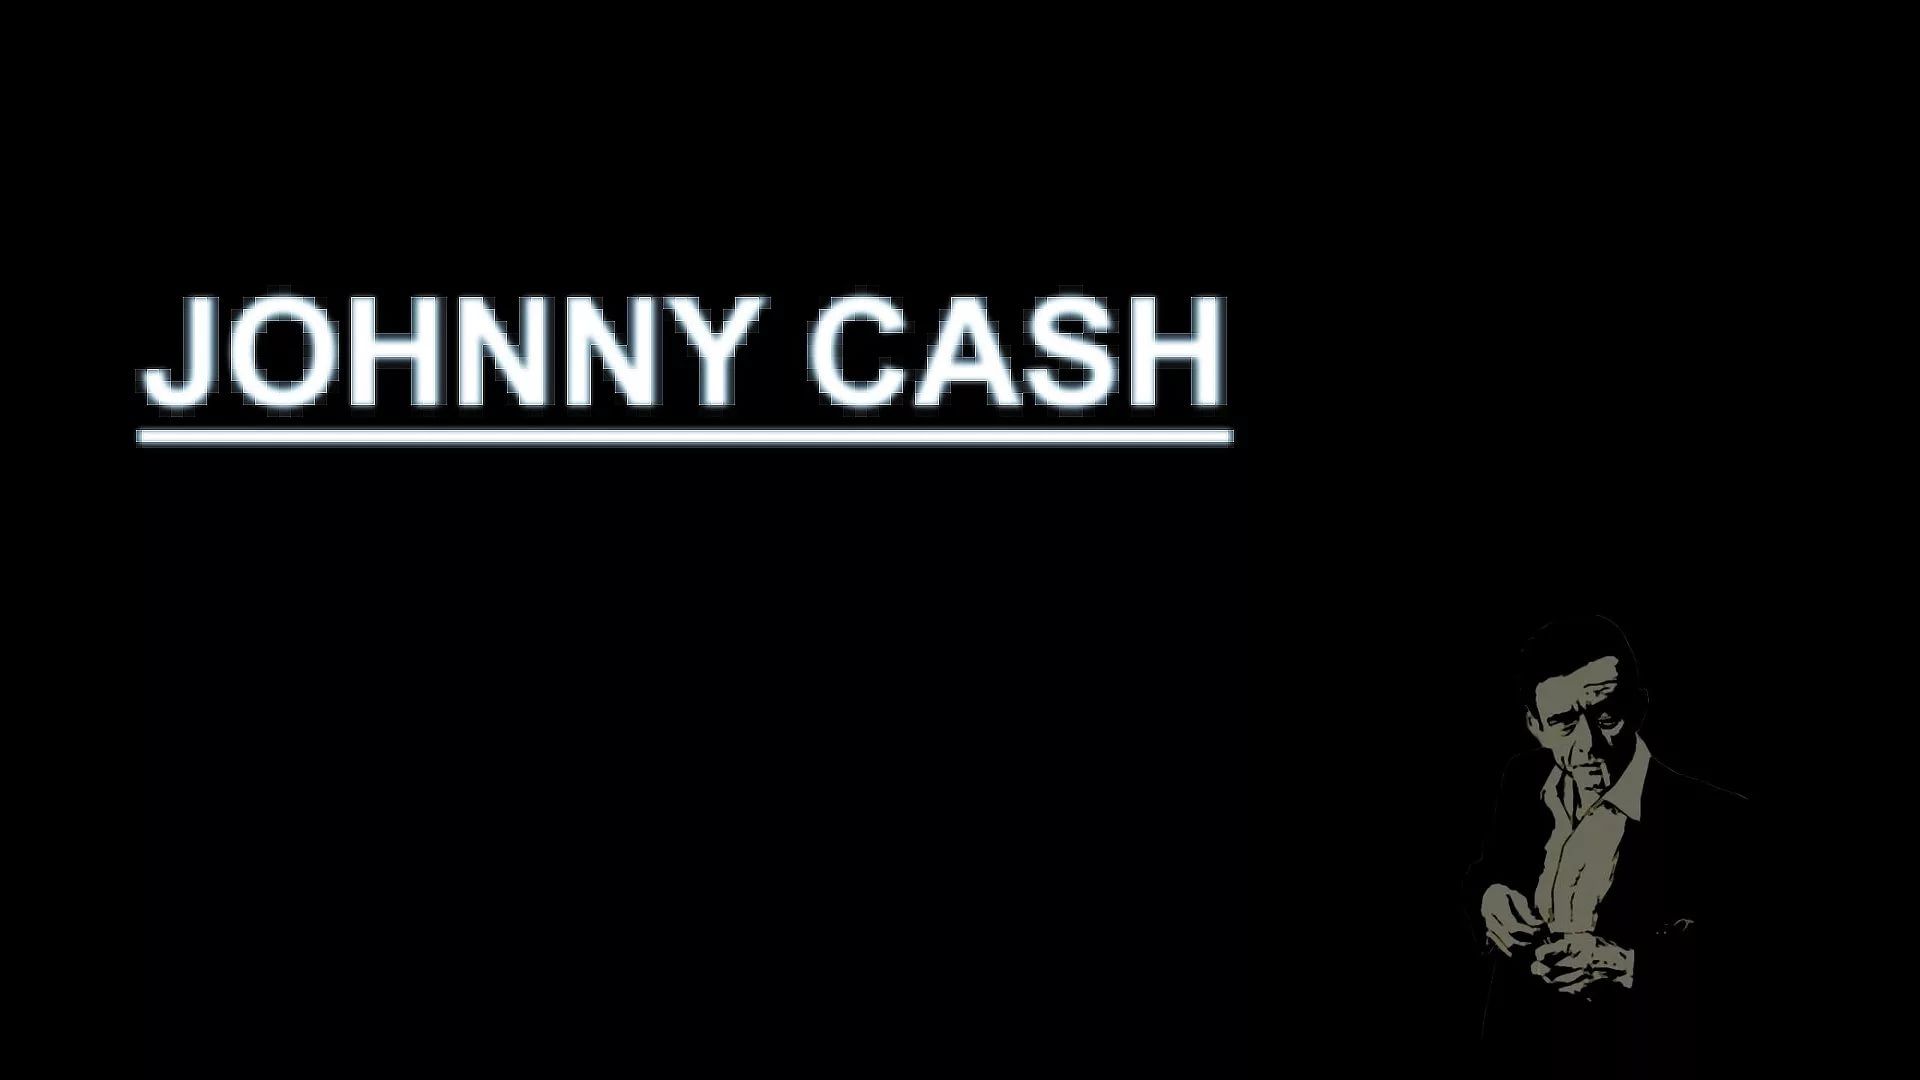 Johnny Cash wallpaper